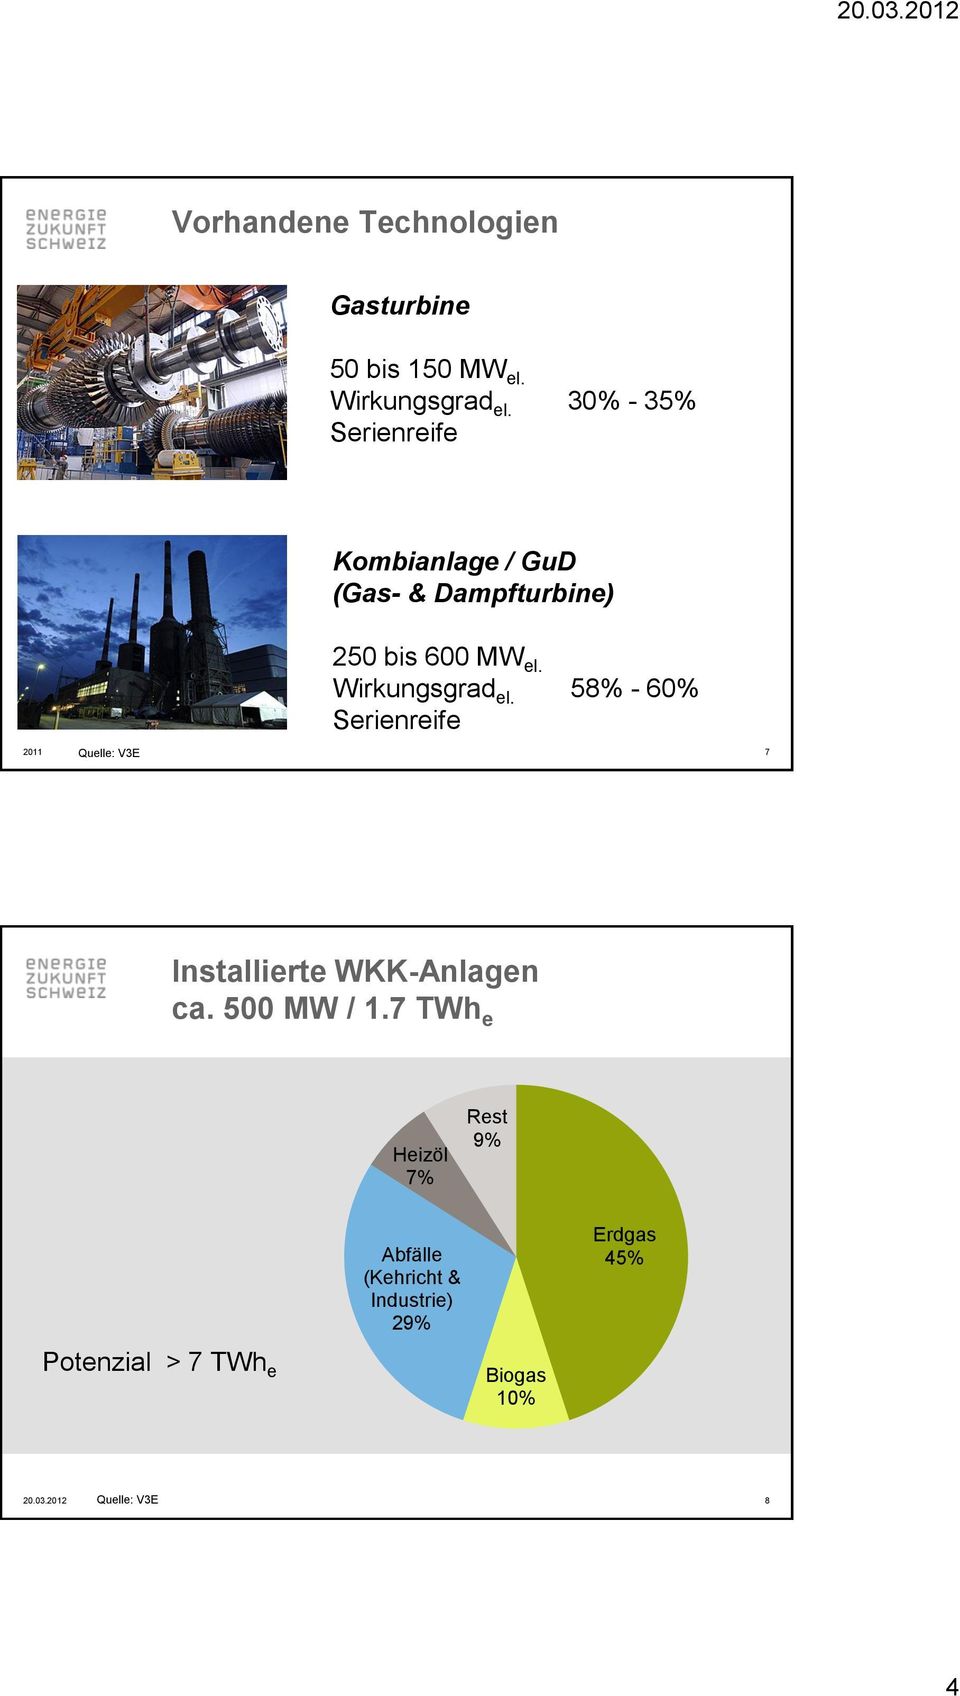 Wirkungsgrad el. 58% - 60% Serienreife 2011 Quelle: V3E 7 Installierte WKK-Anlagen ca.